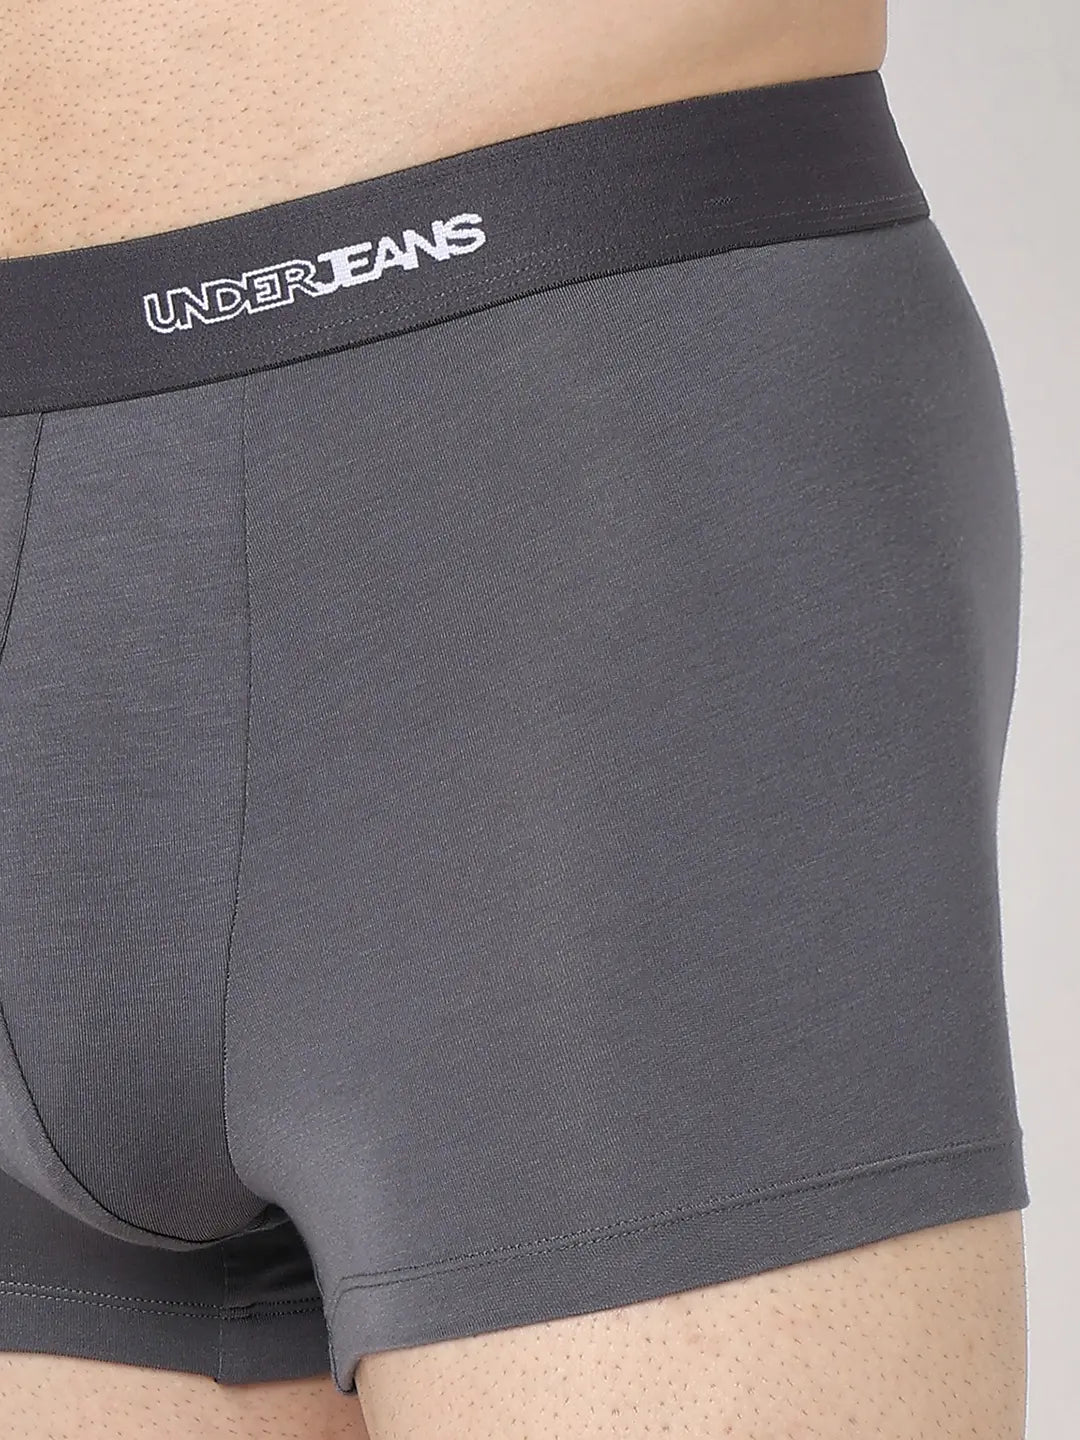 Underjeans by Spykar Men Premium Mid Grey Cotton Blend Regular Fit Trunk